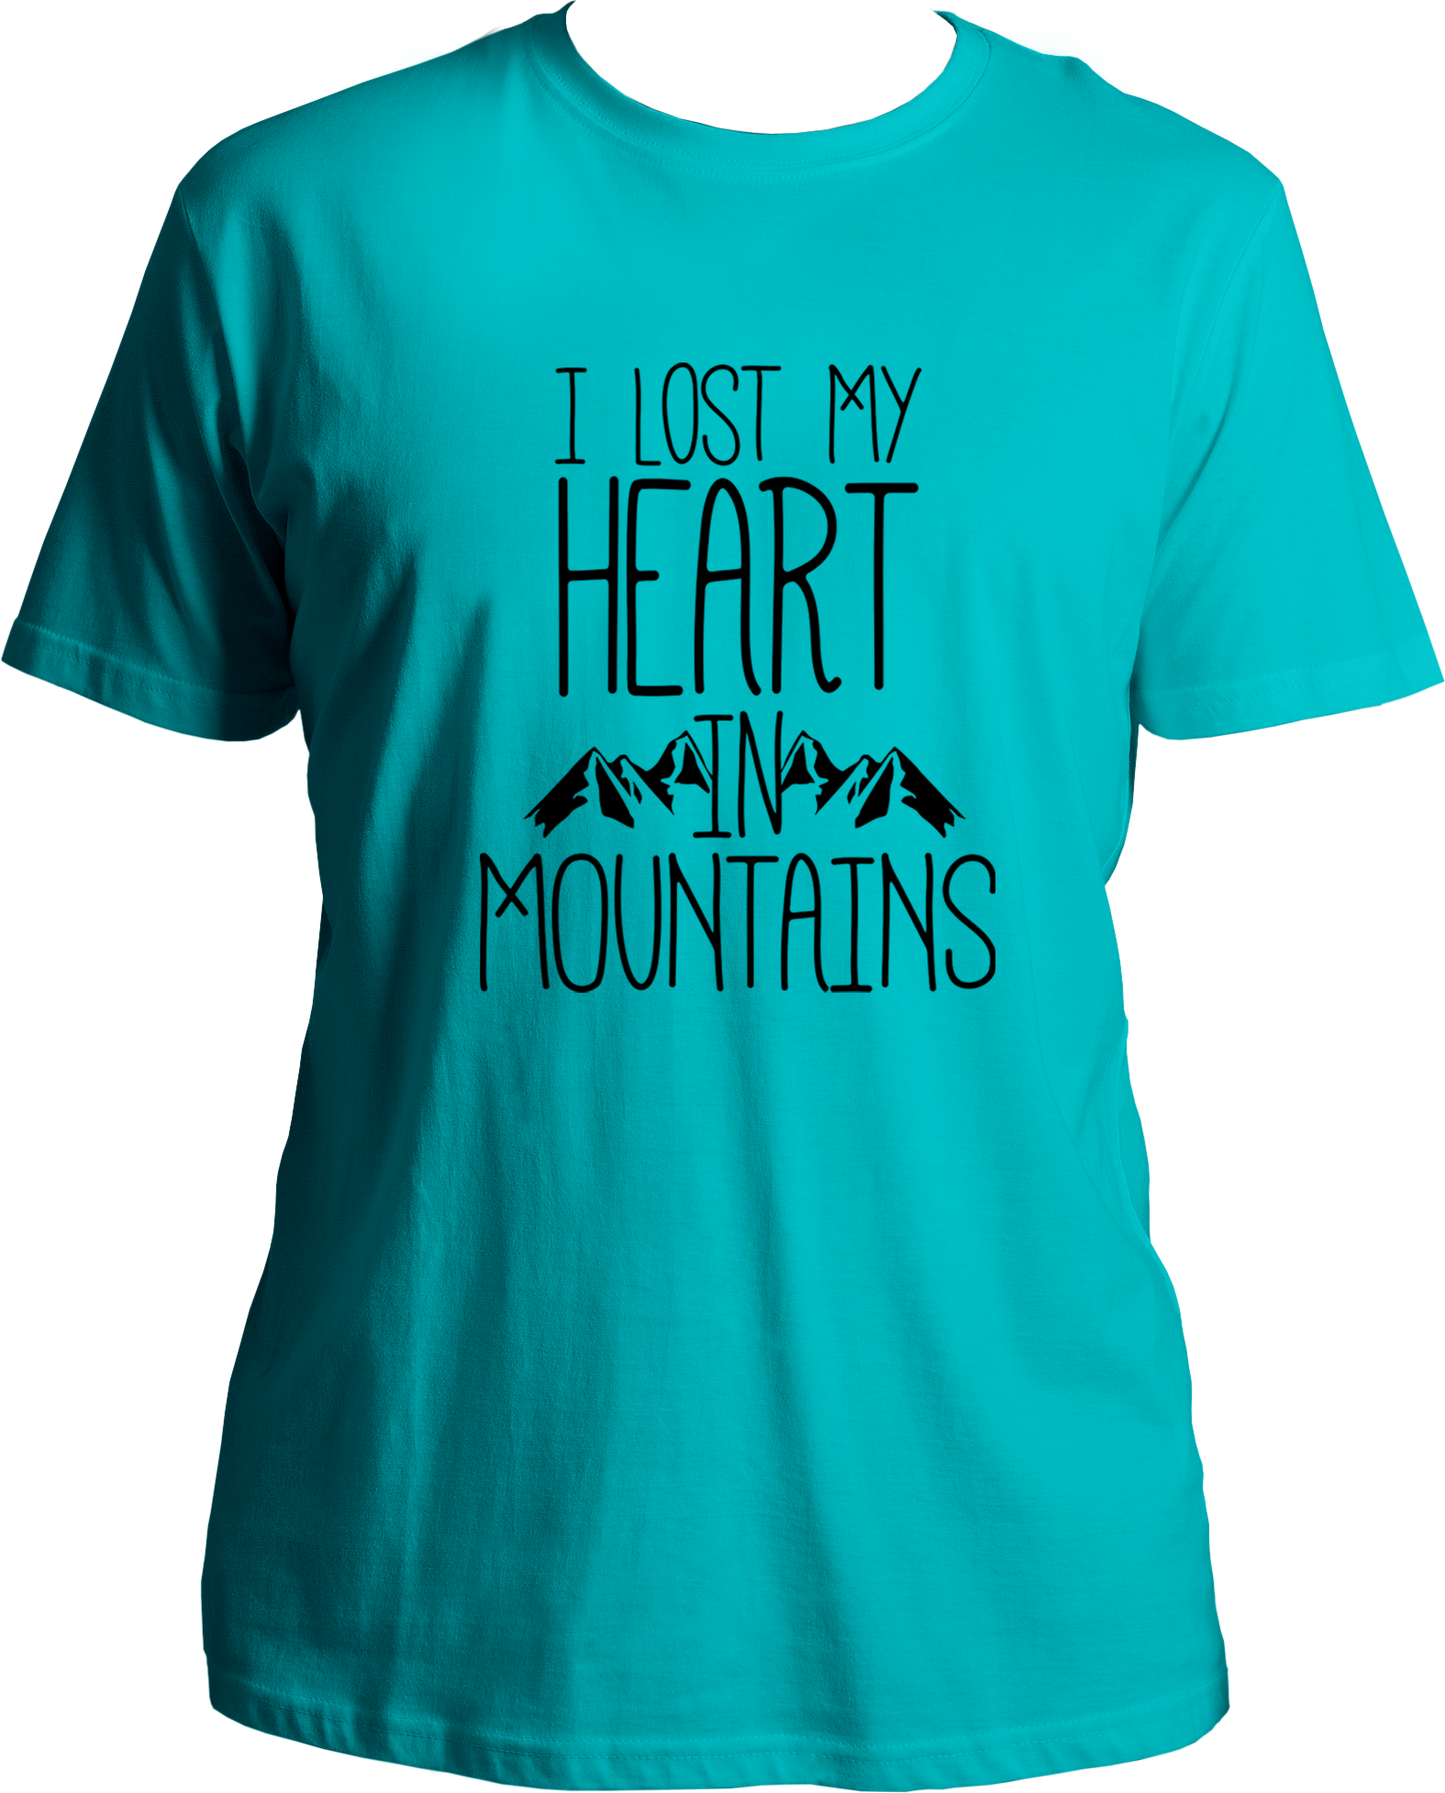 I Lost My Heart in Mountains Unisex Round Neck Cotton T-Shirt from Garrari. 